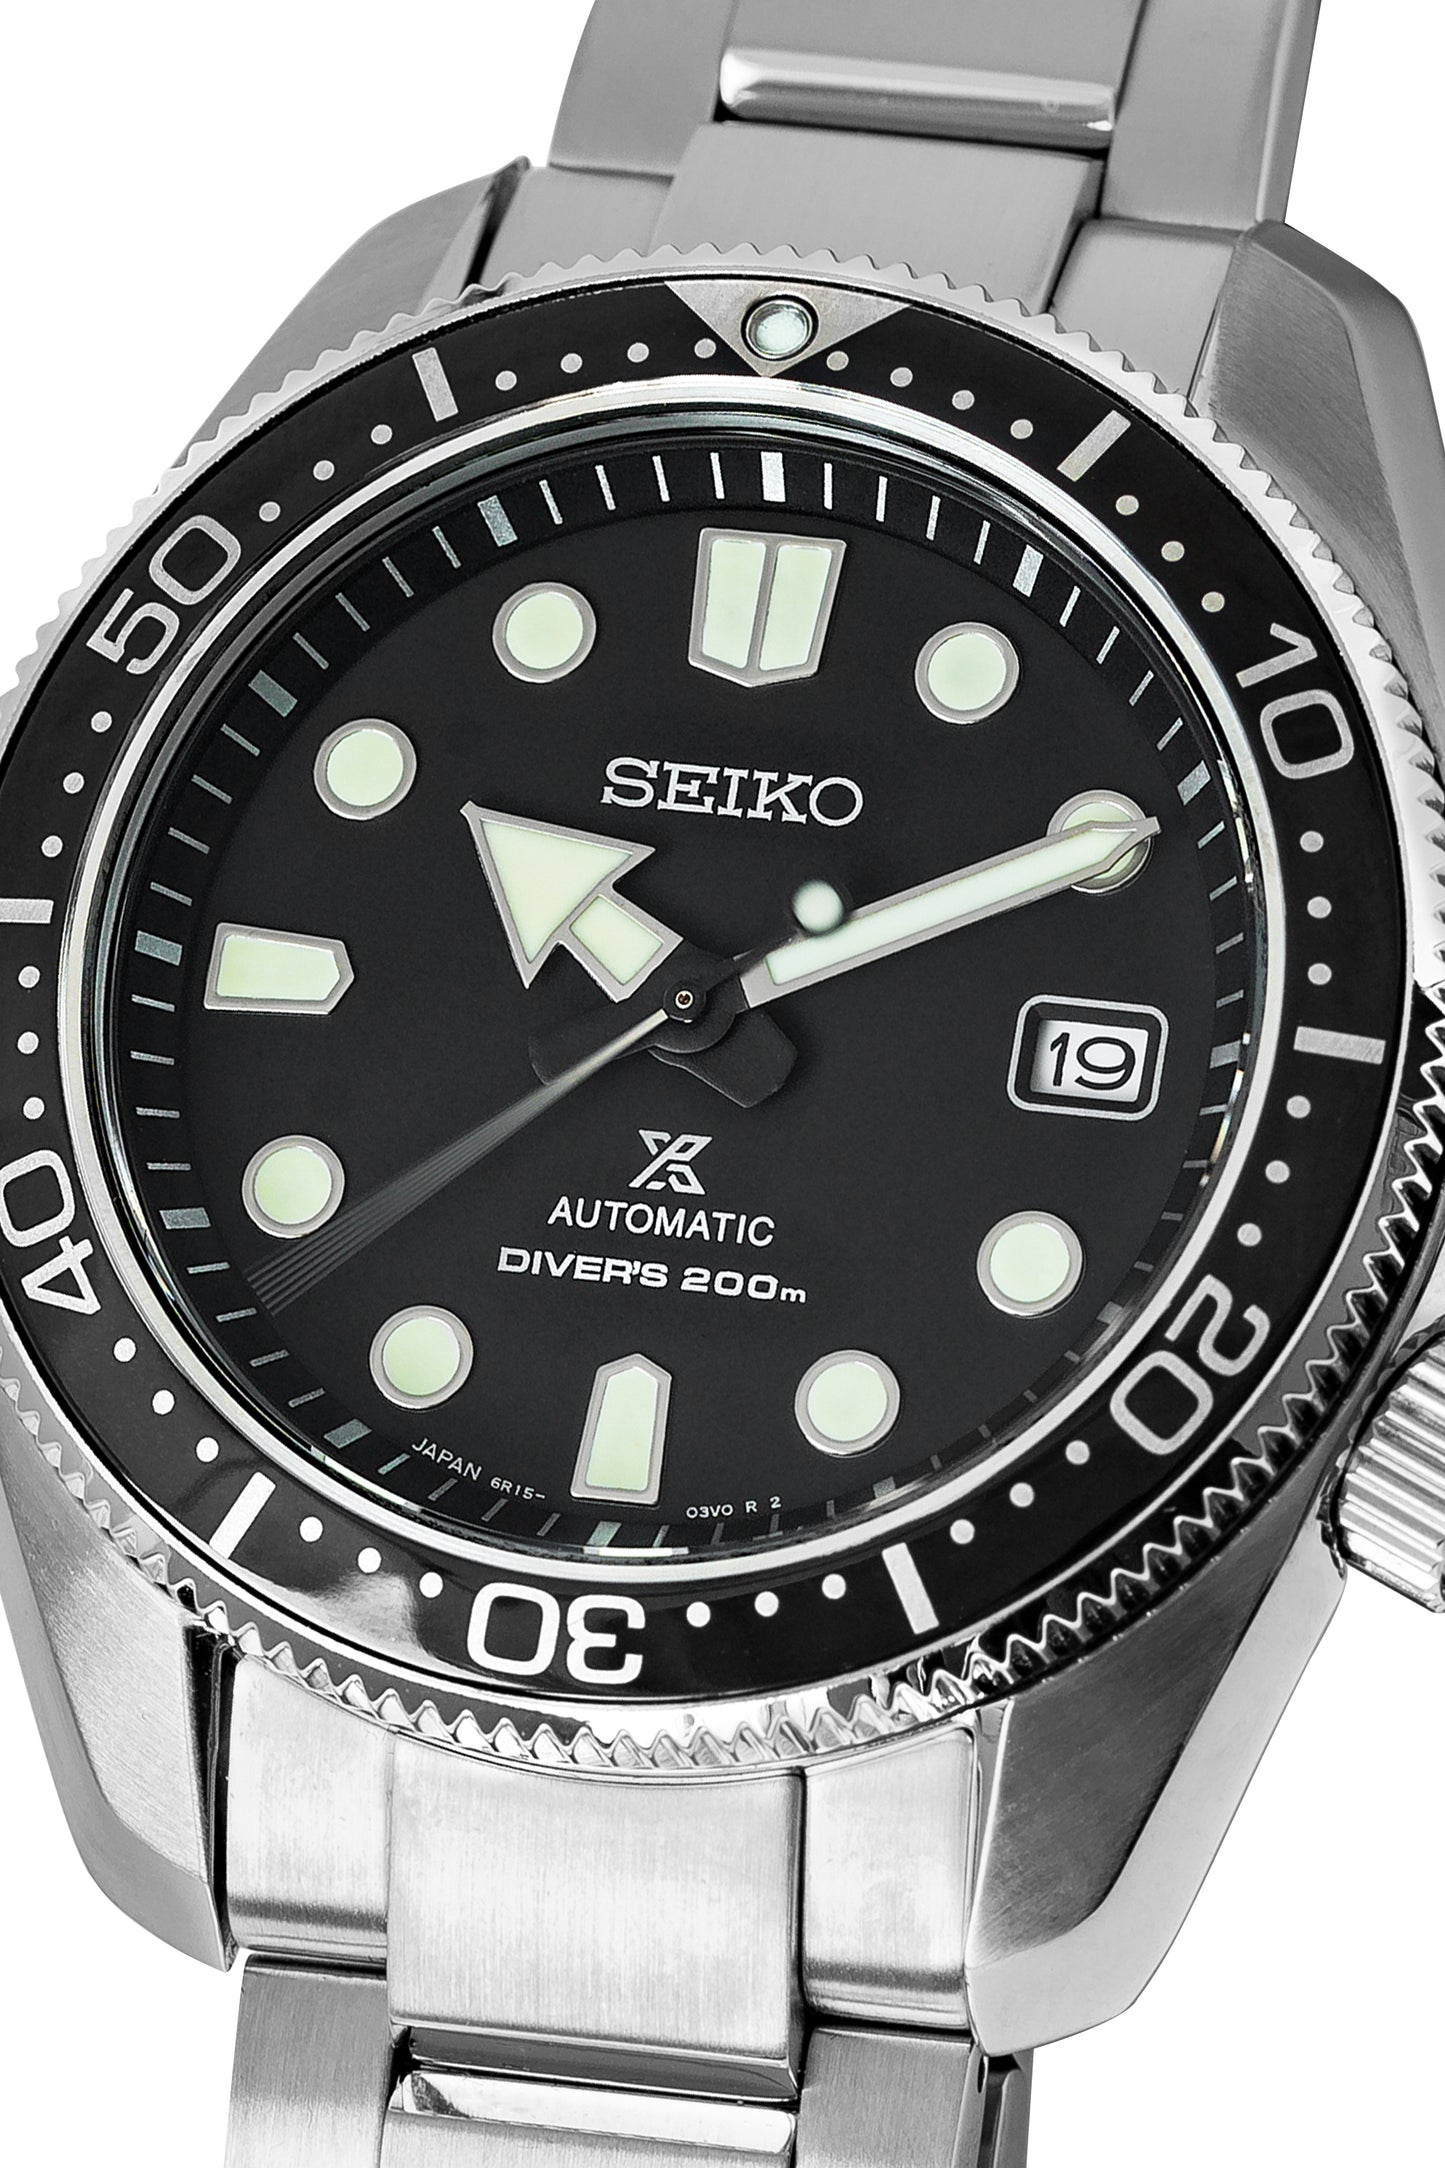 SEIKO SPB077J1 Prospex Samurai Automatic Men's Diver Watch – Black